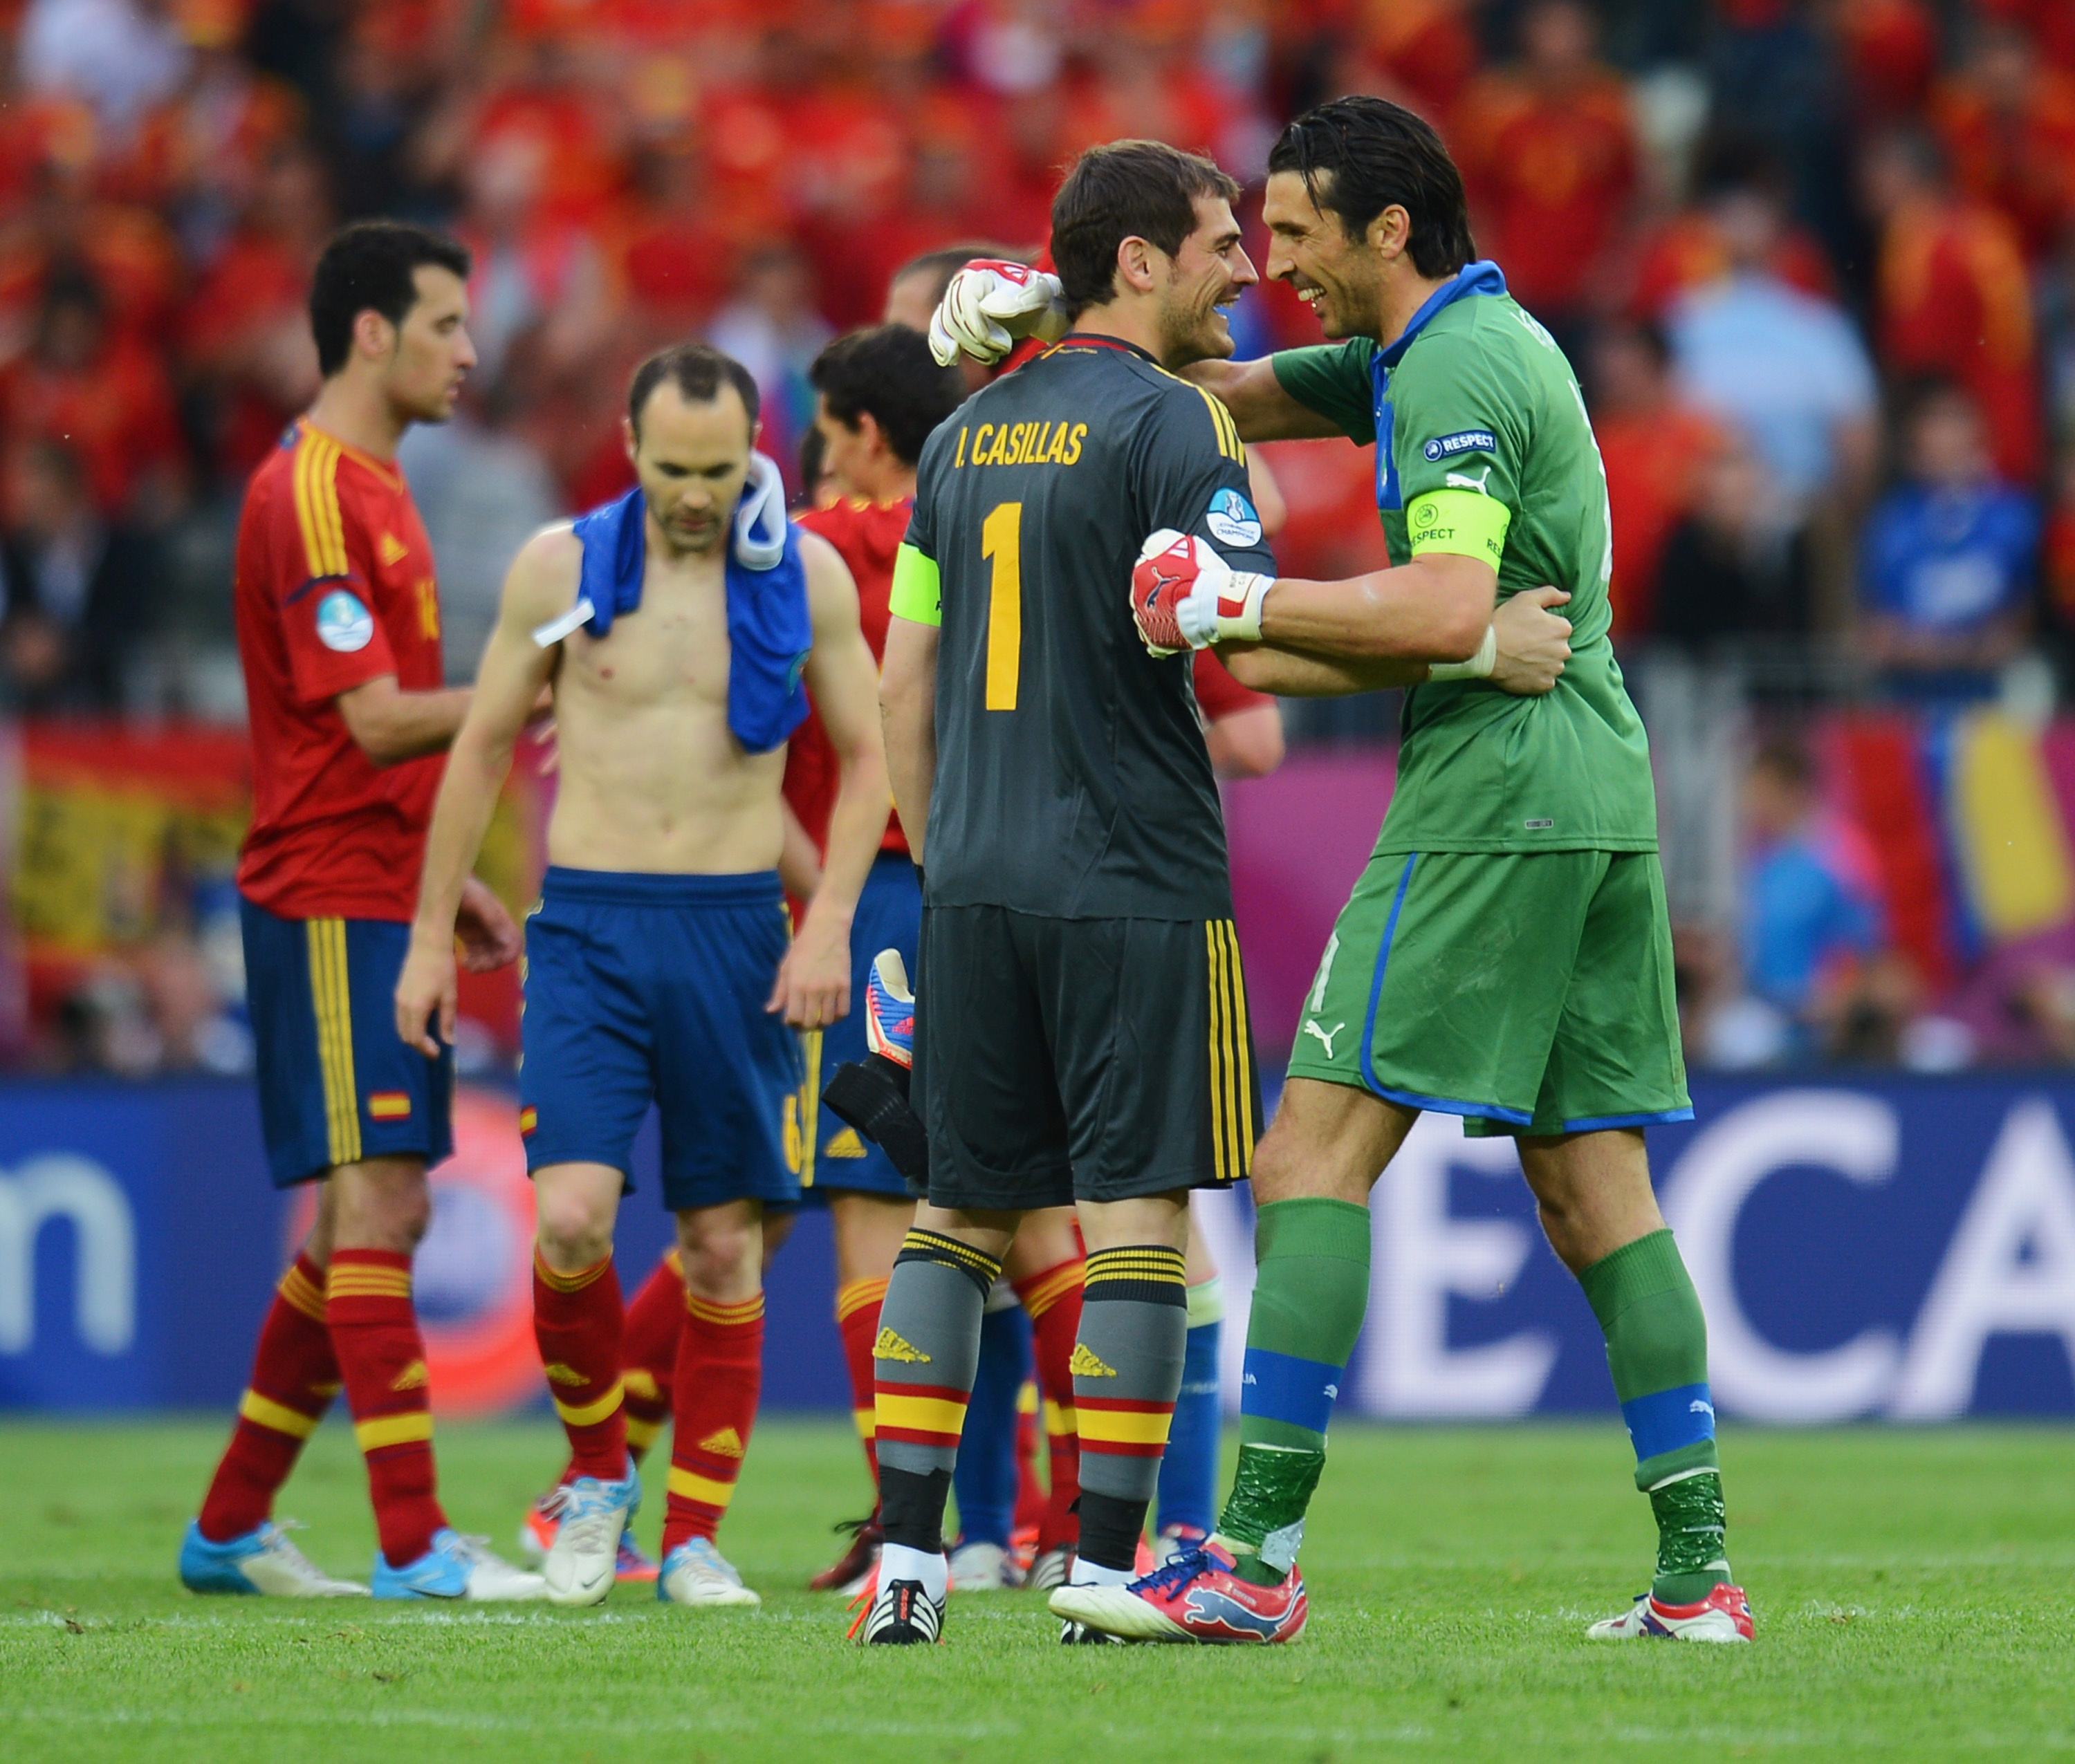 Italien, Fotboll, Spanien, EM, Iker Casillas, Gianluigi Buffon